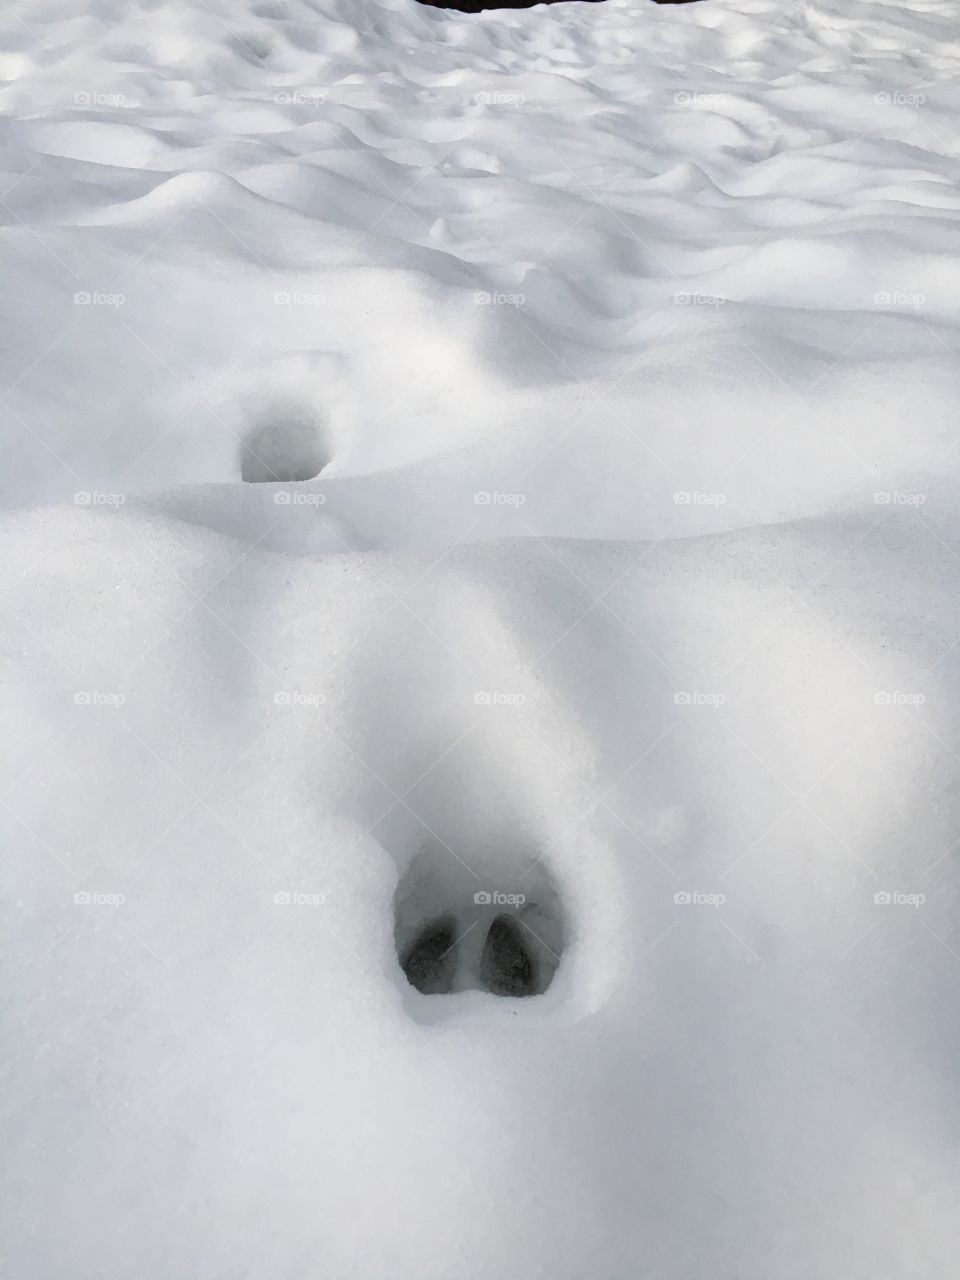 Deer track in the snow.